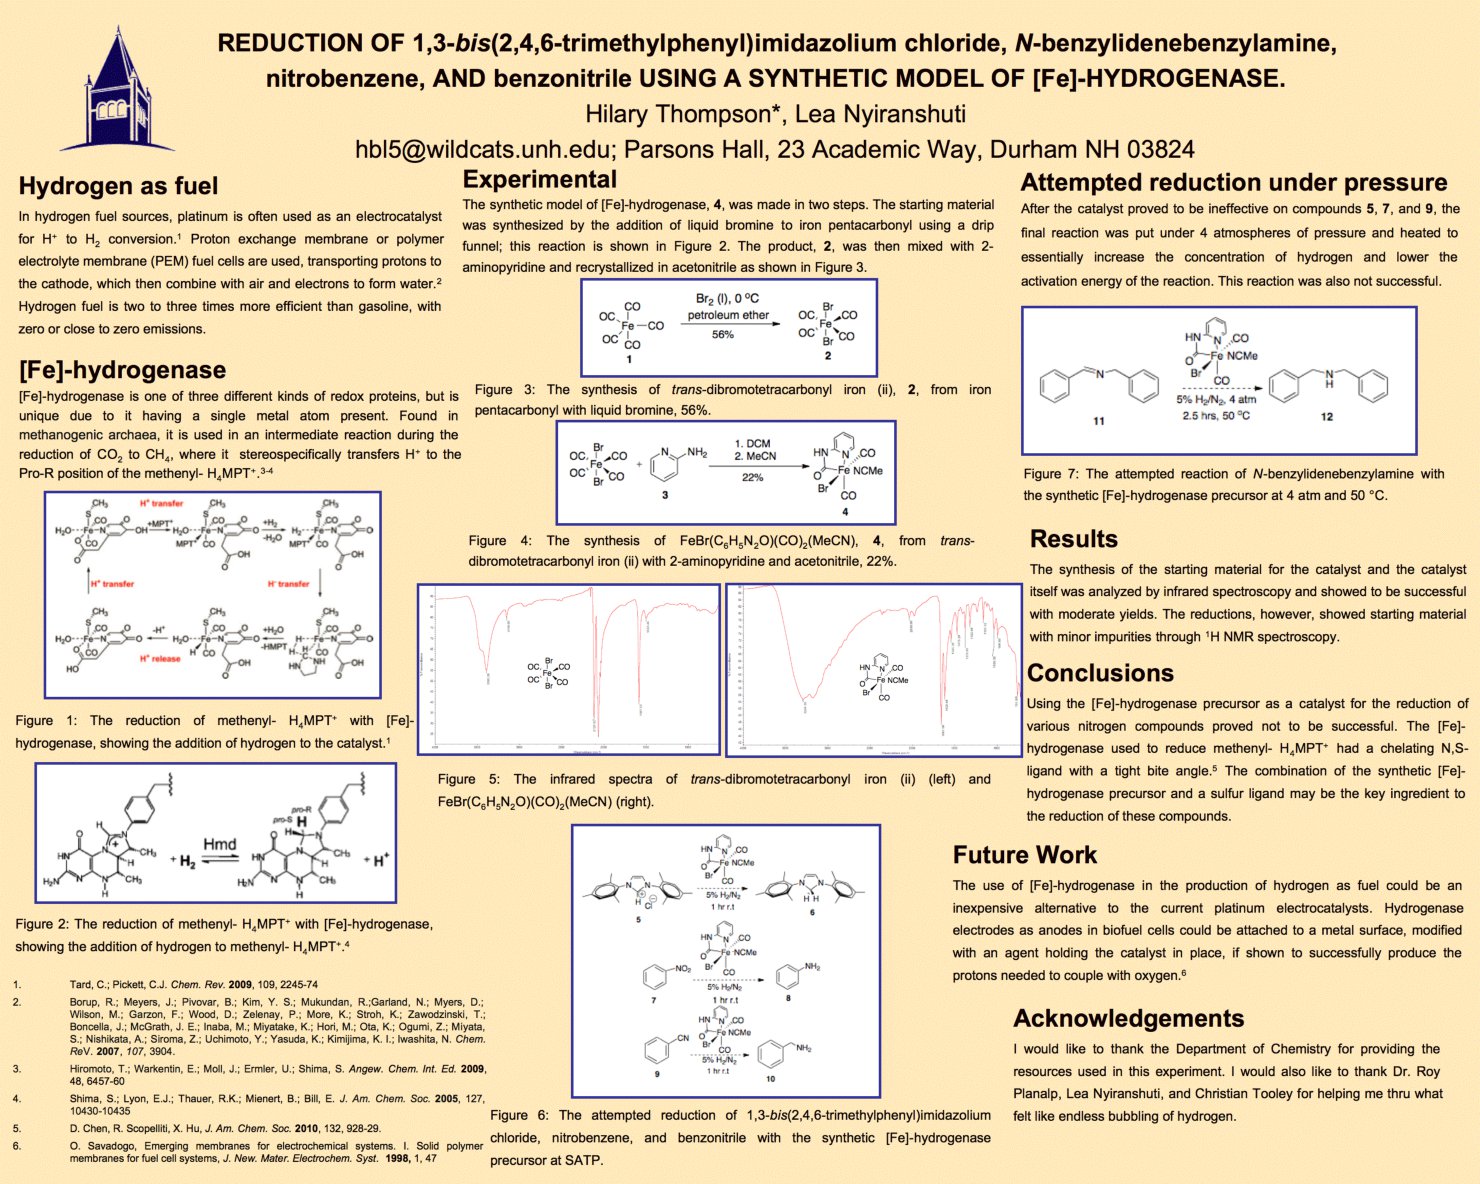 Reduction Of 1,3-Bis(2,4,6-Trimethylphenyl) Imidazolium Chloride, N-Benzylidenebenzylamine Nitrobenzene, And Benzonitrille Using A Synthetic Model Of [Fe]-Hydrogenase by hbl5